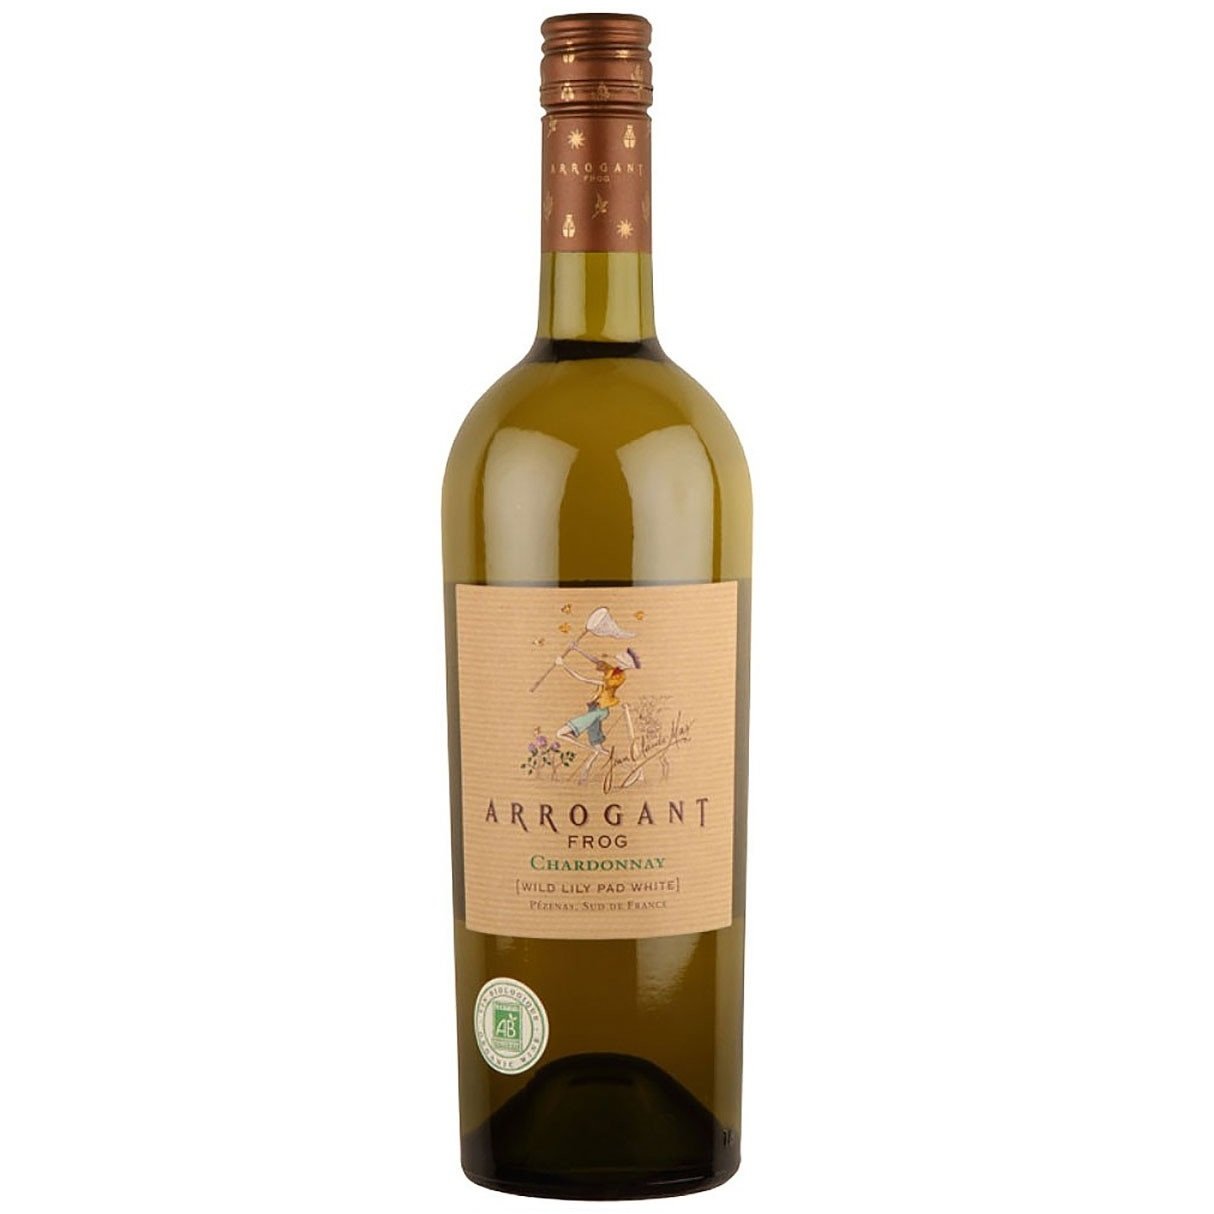 Вино Domaines Paul Mas Arrogant Frog Wild Ribet White Chardonnay, белое, сухое, 13%, 0,75 л (8000009268019) - фото 1